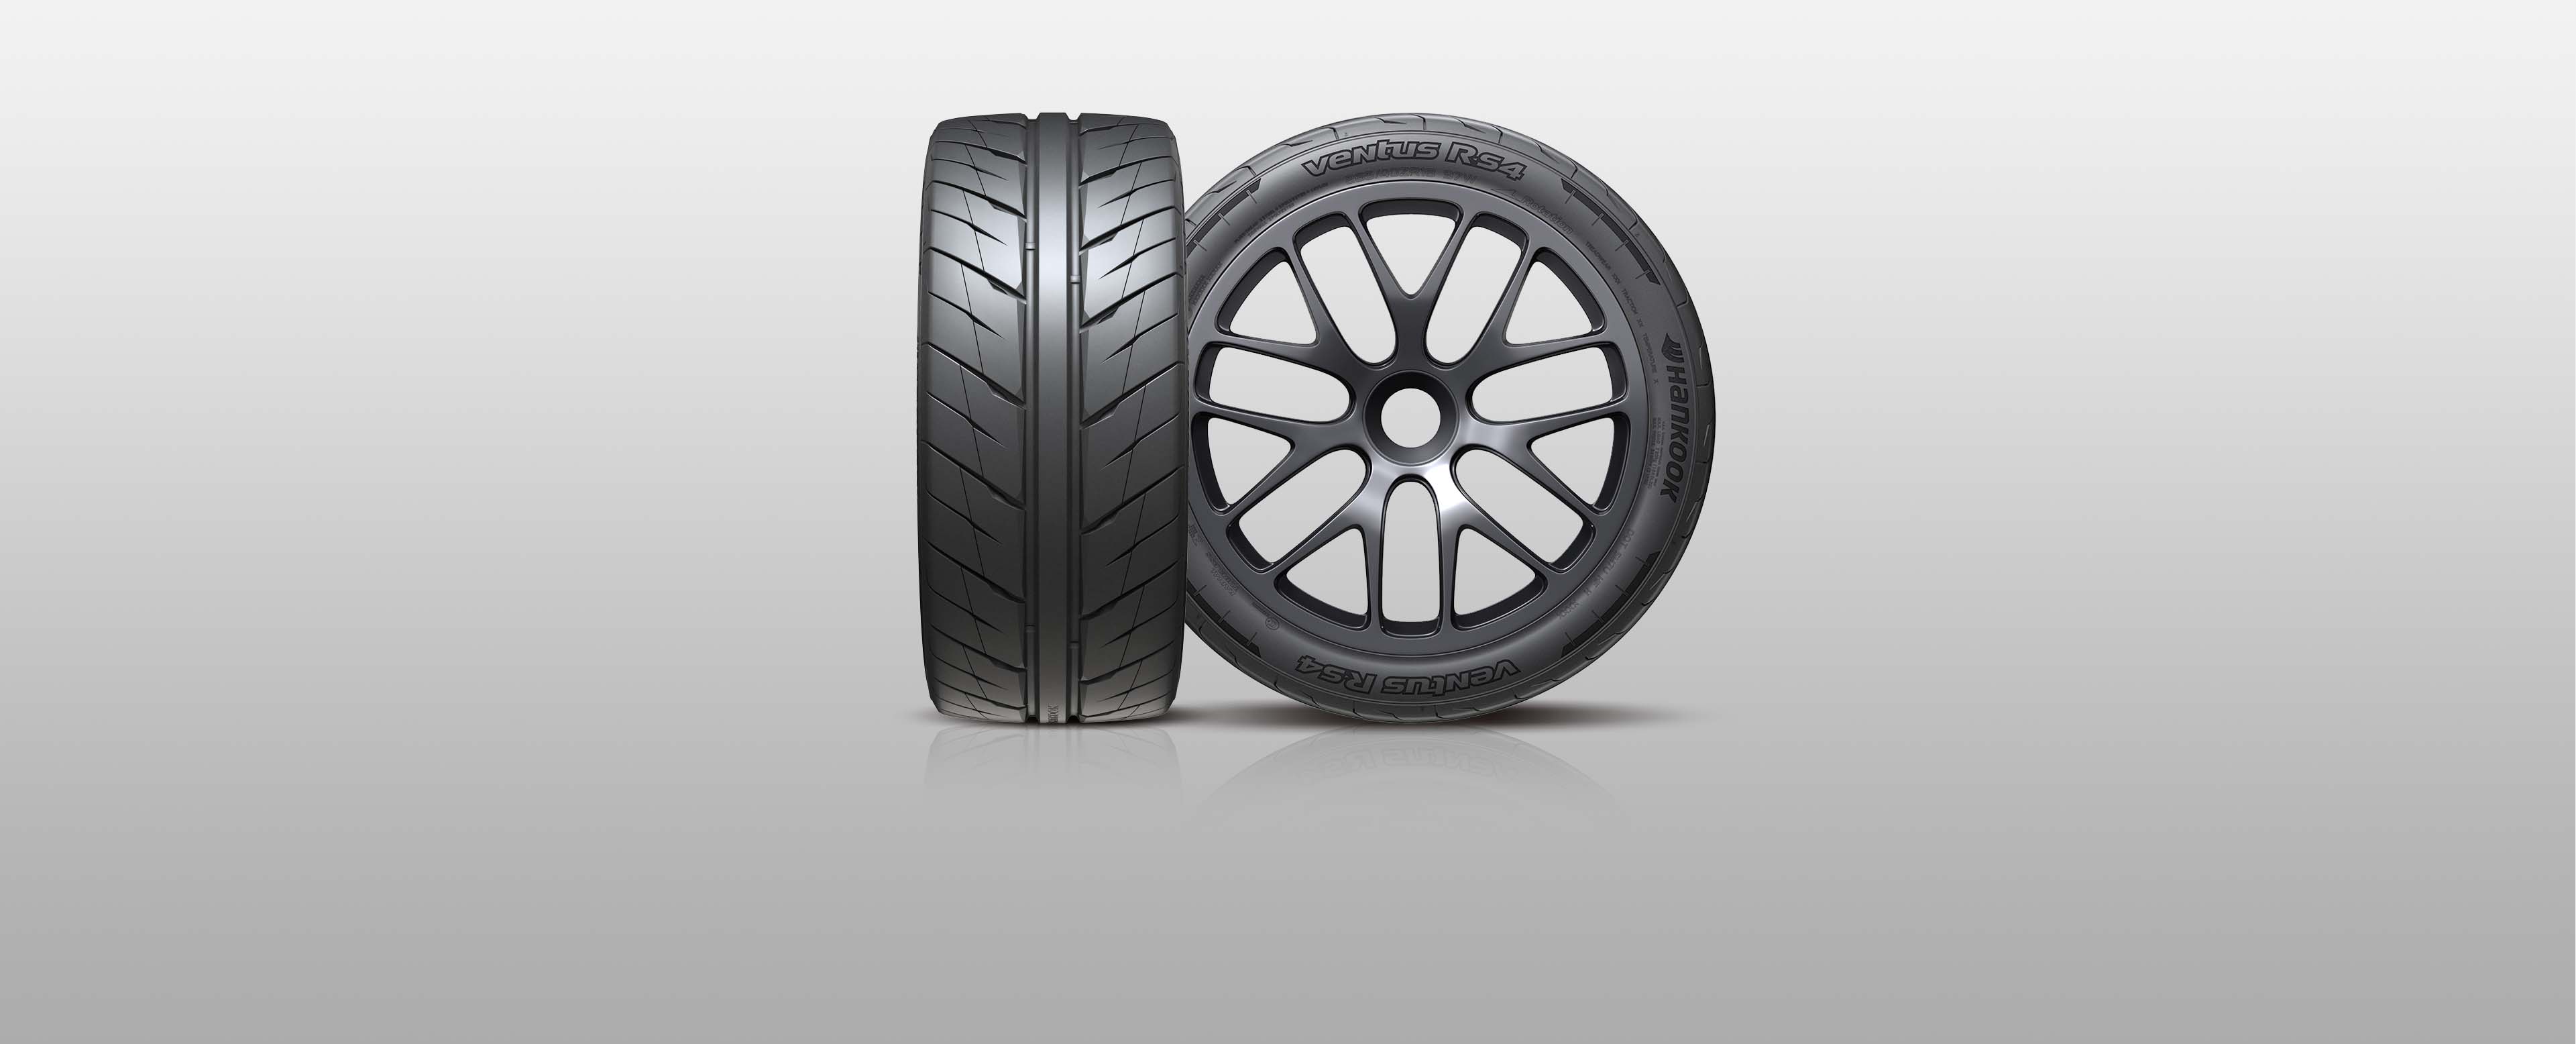 Ventus RS4 - Ventus | Hankook Tire US